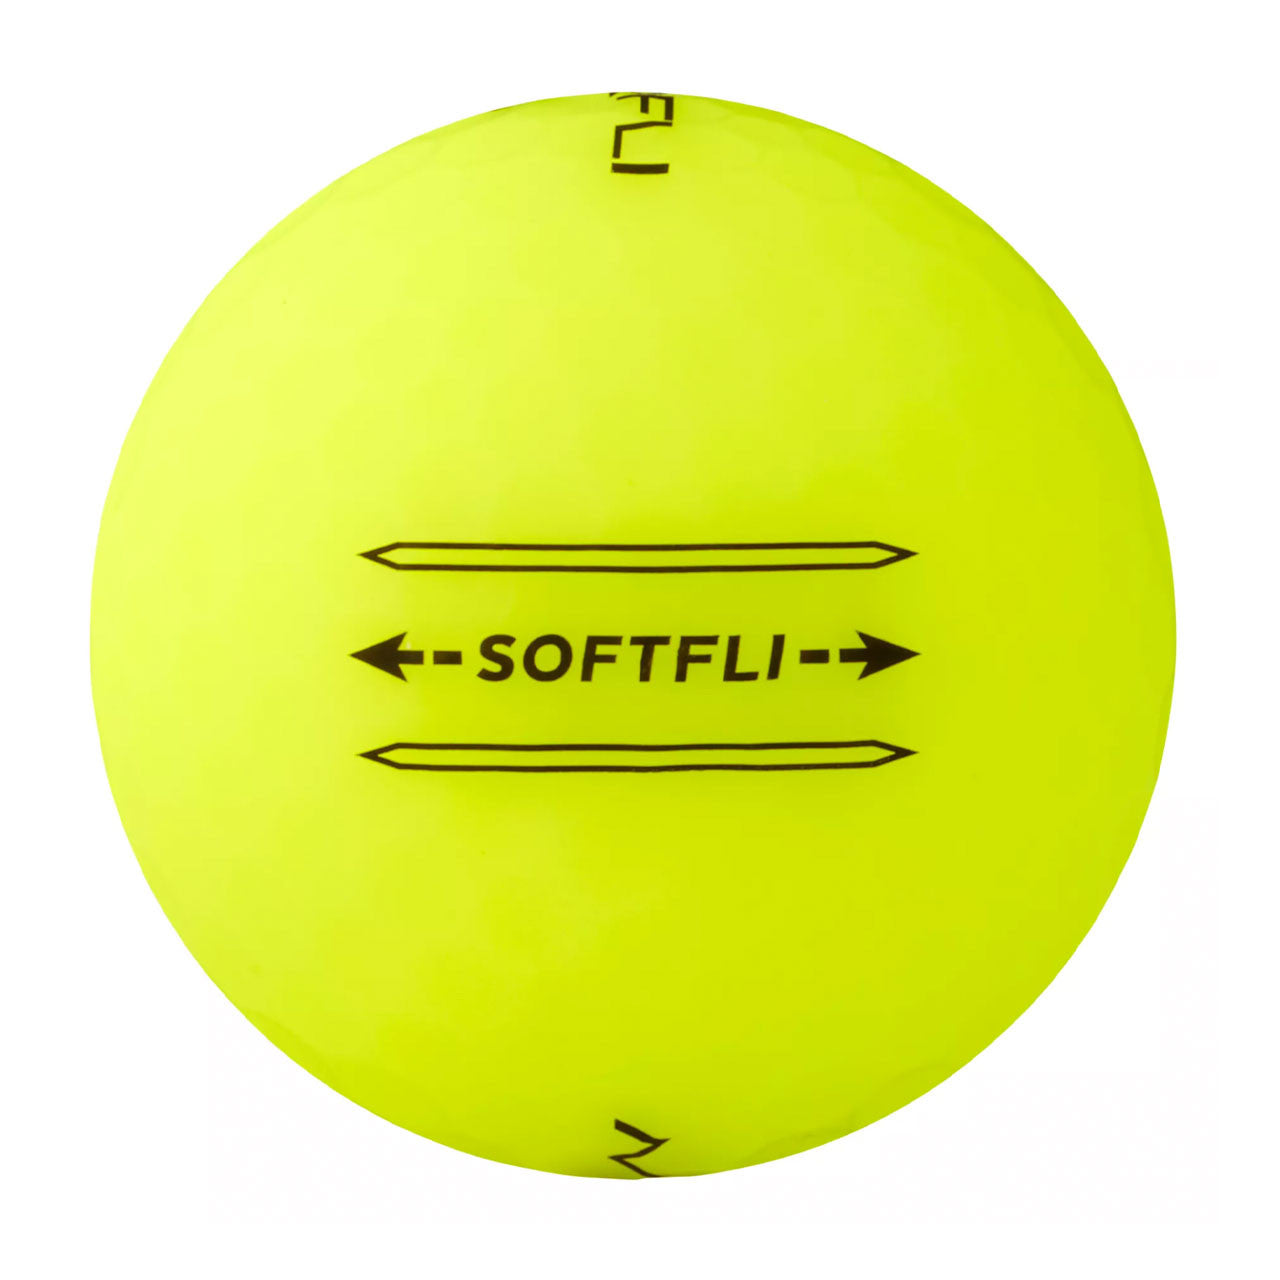 Maxfli 2023 SoftFli Matte Golf Balls